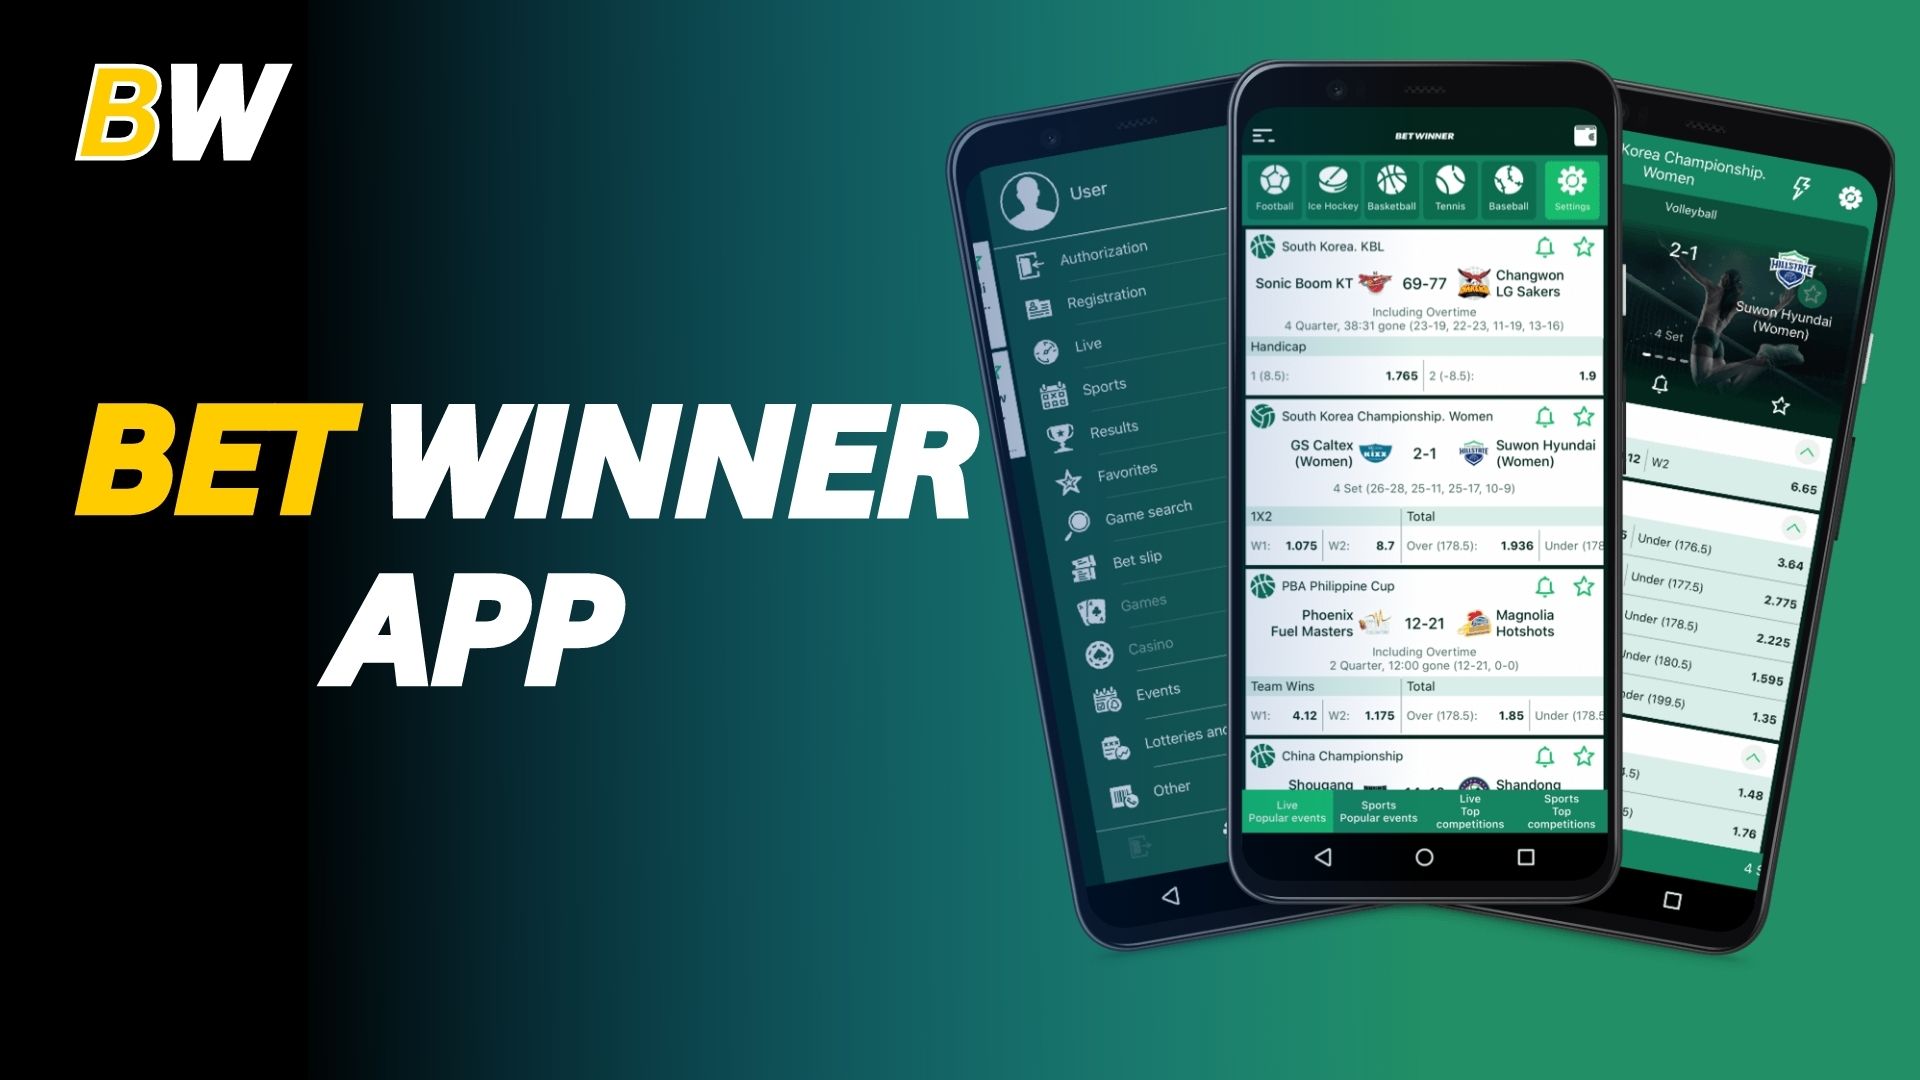 Betwinner App